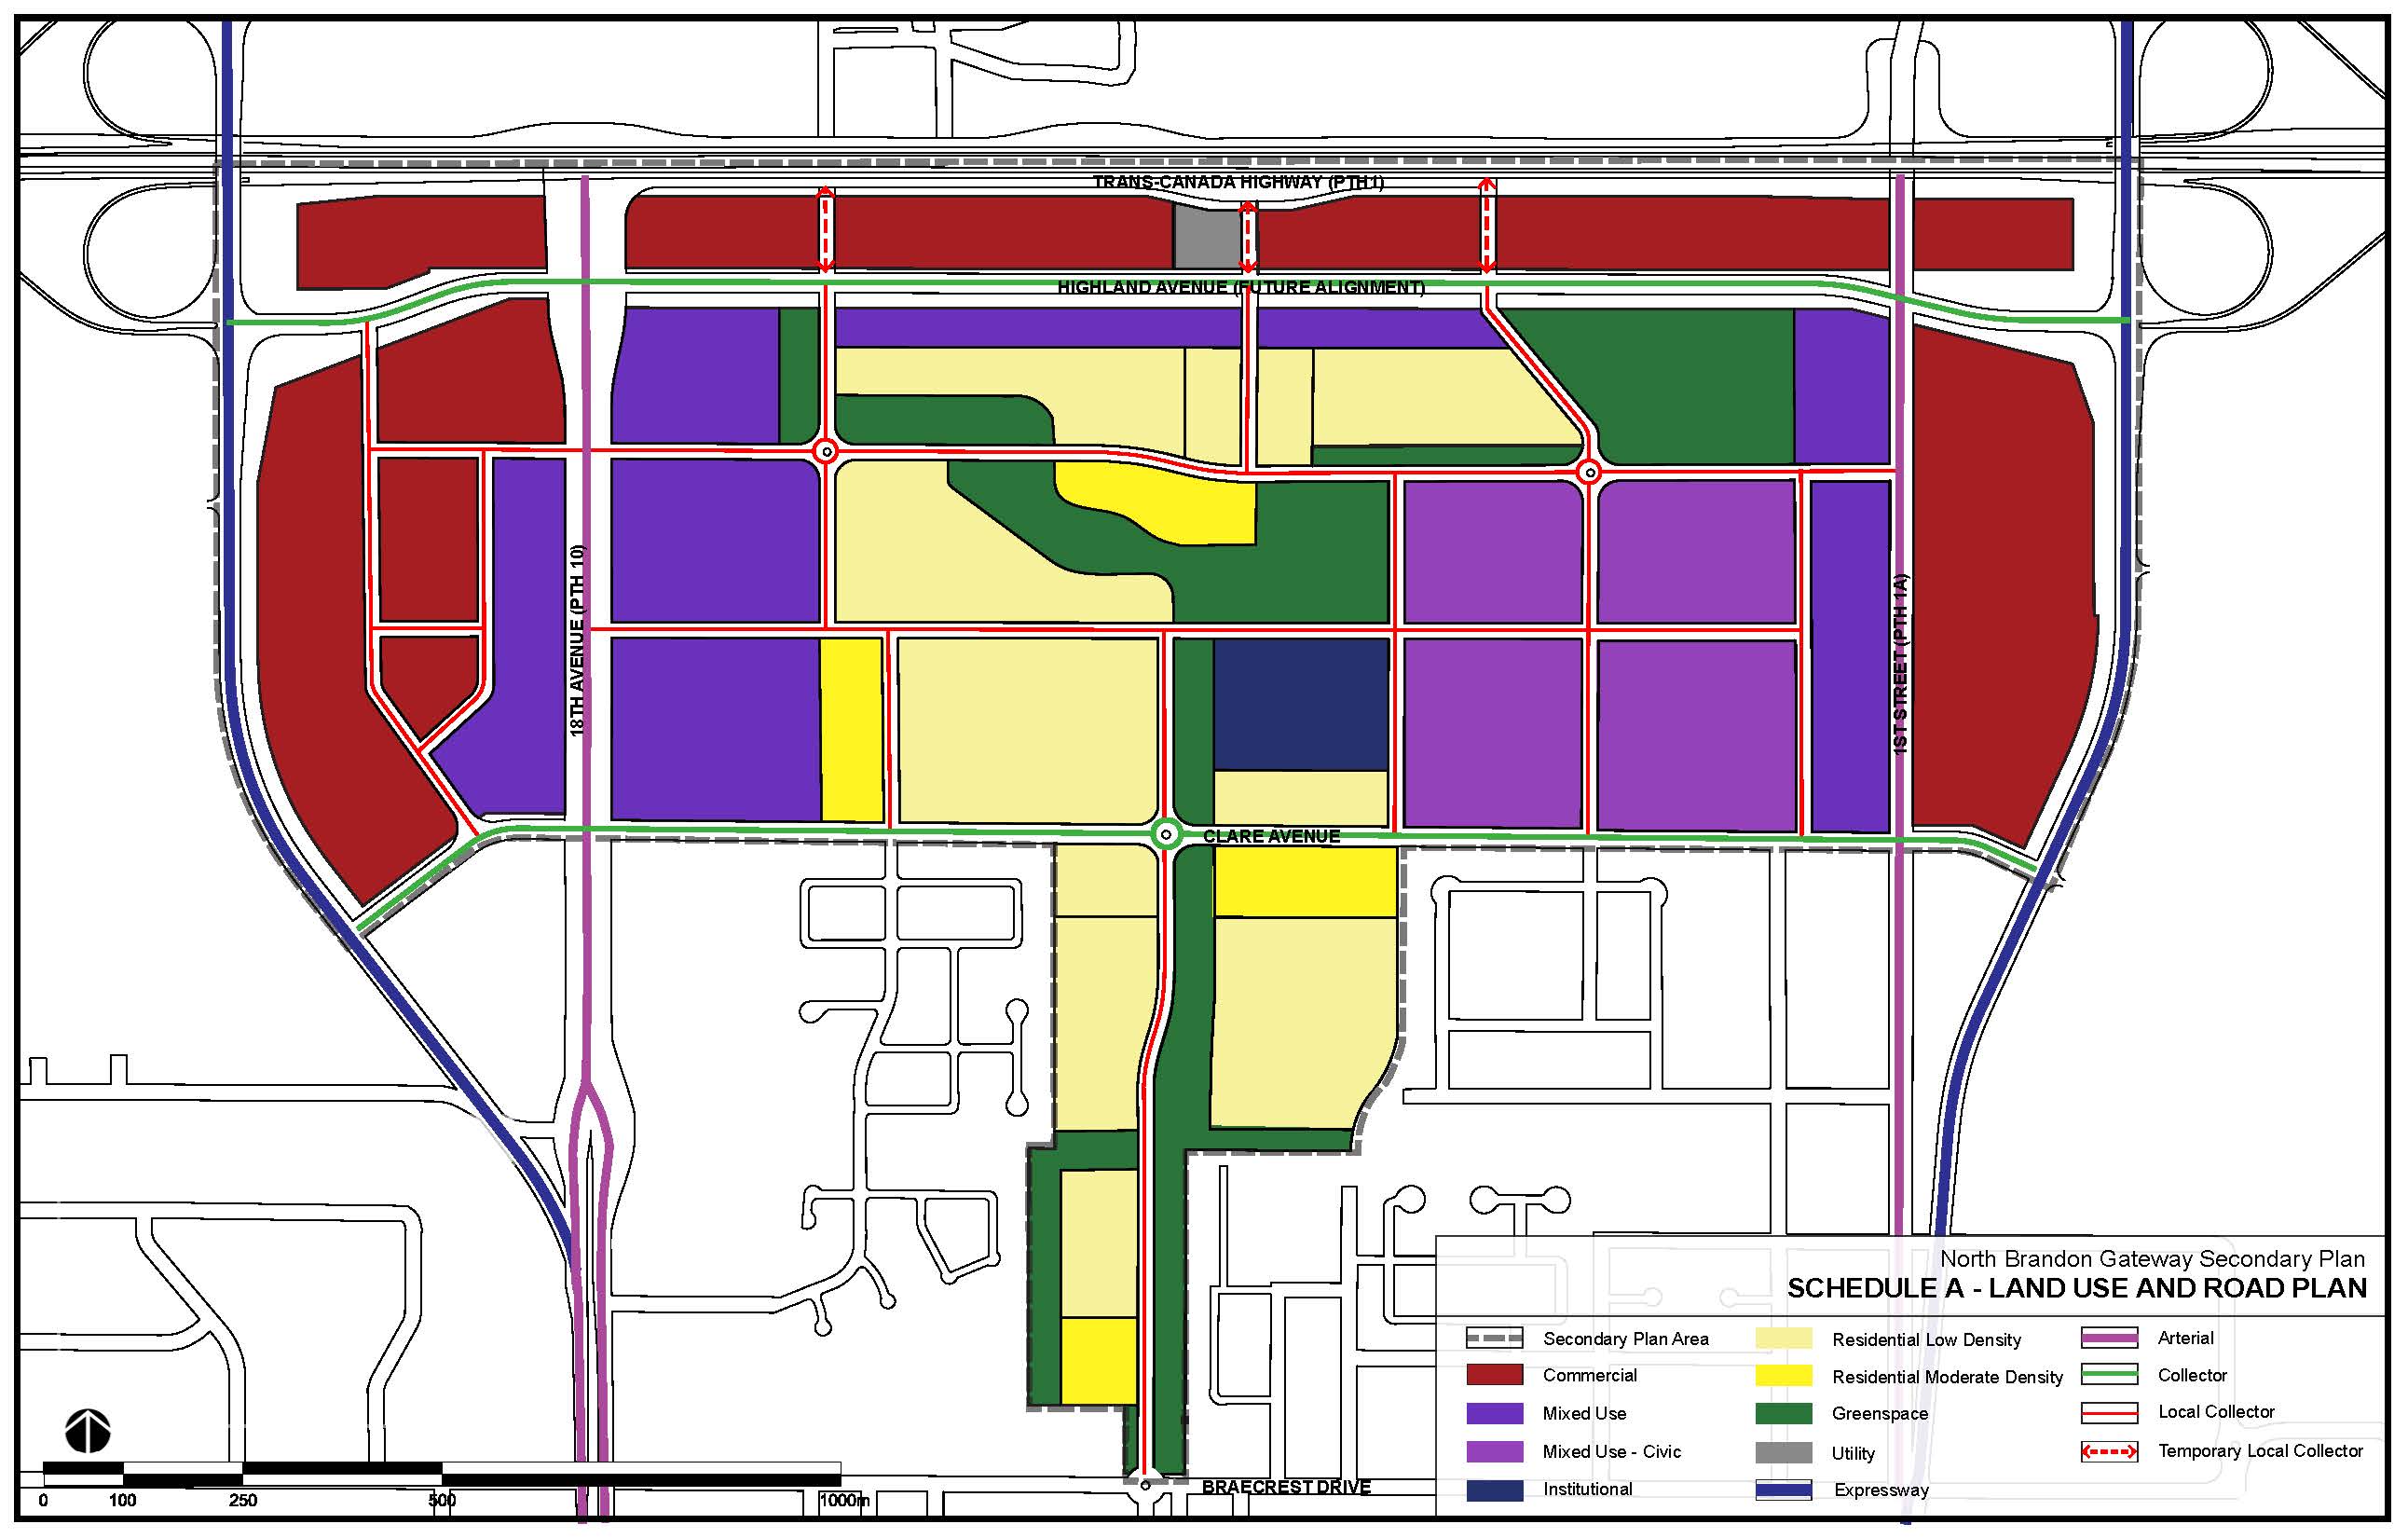 7079 Secondary Plan NorthGateway Land Use